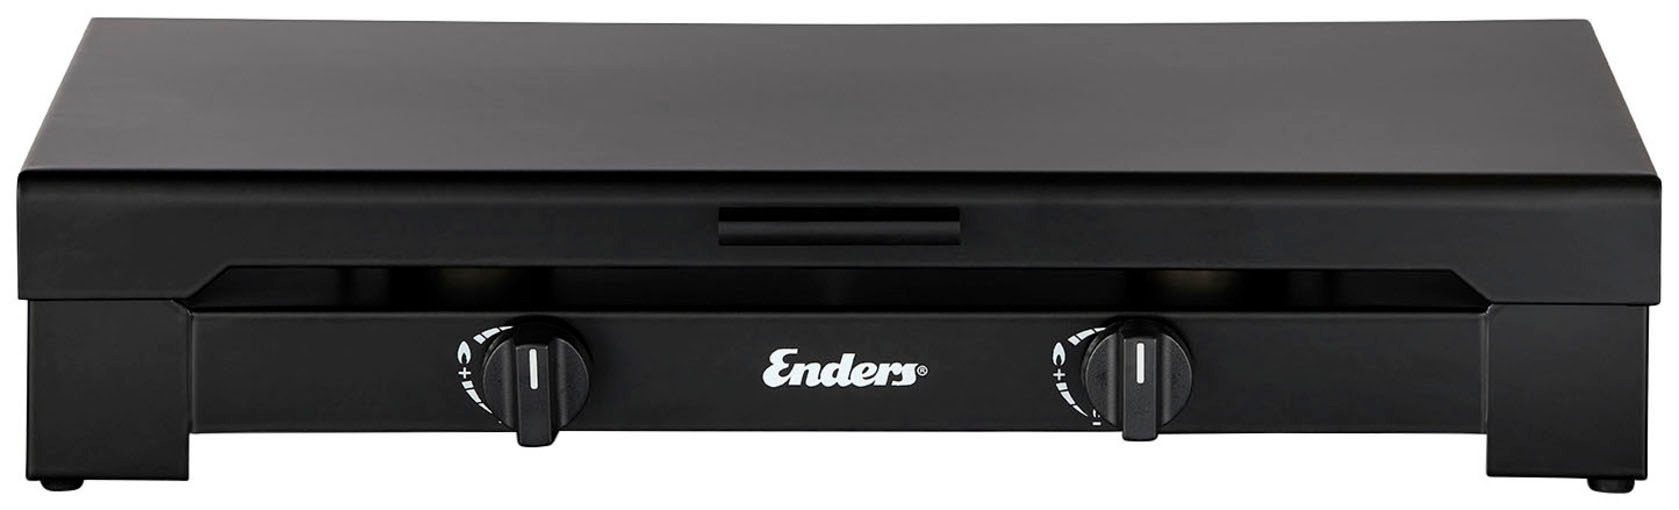 Enders® Gaskocher Campingkocher Dalgety Black 2, BxH: 49x9 cm | Kocher